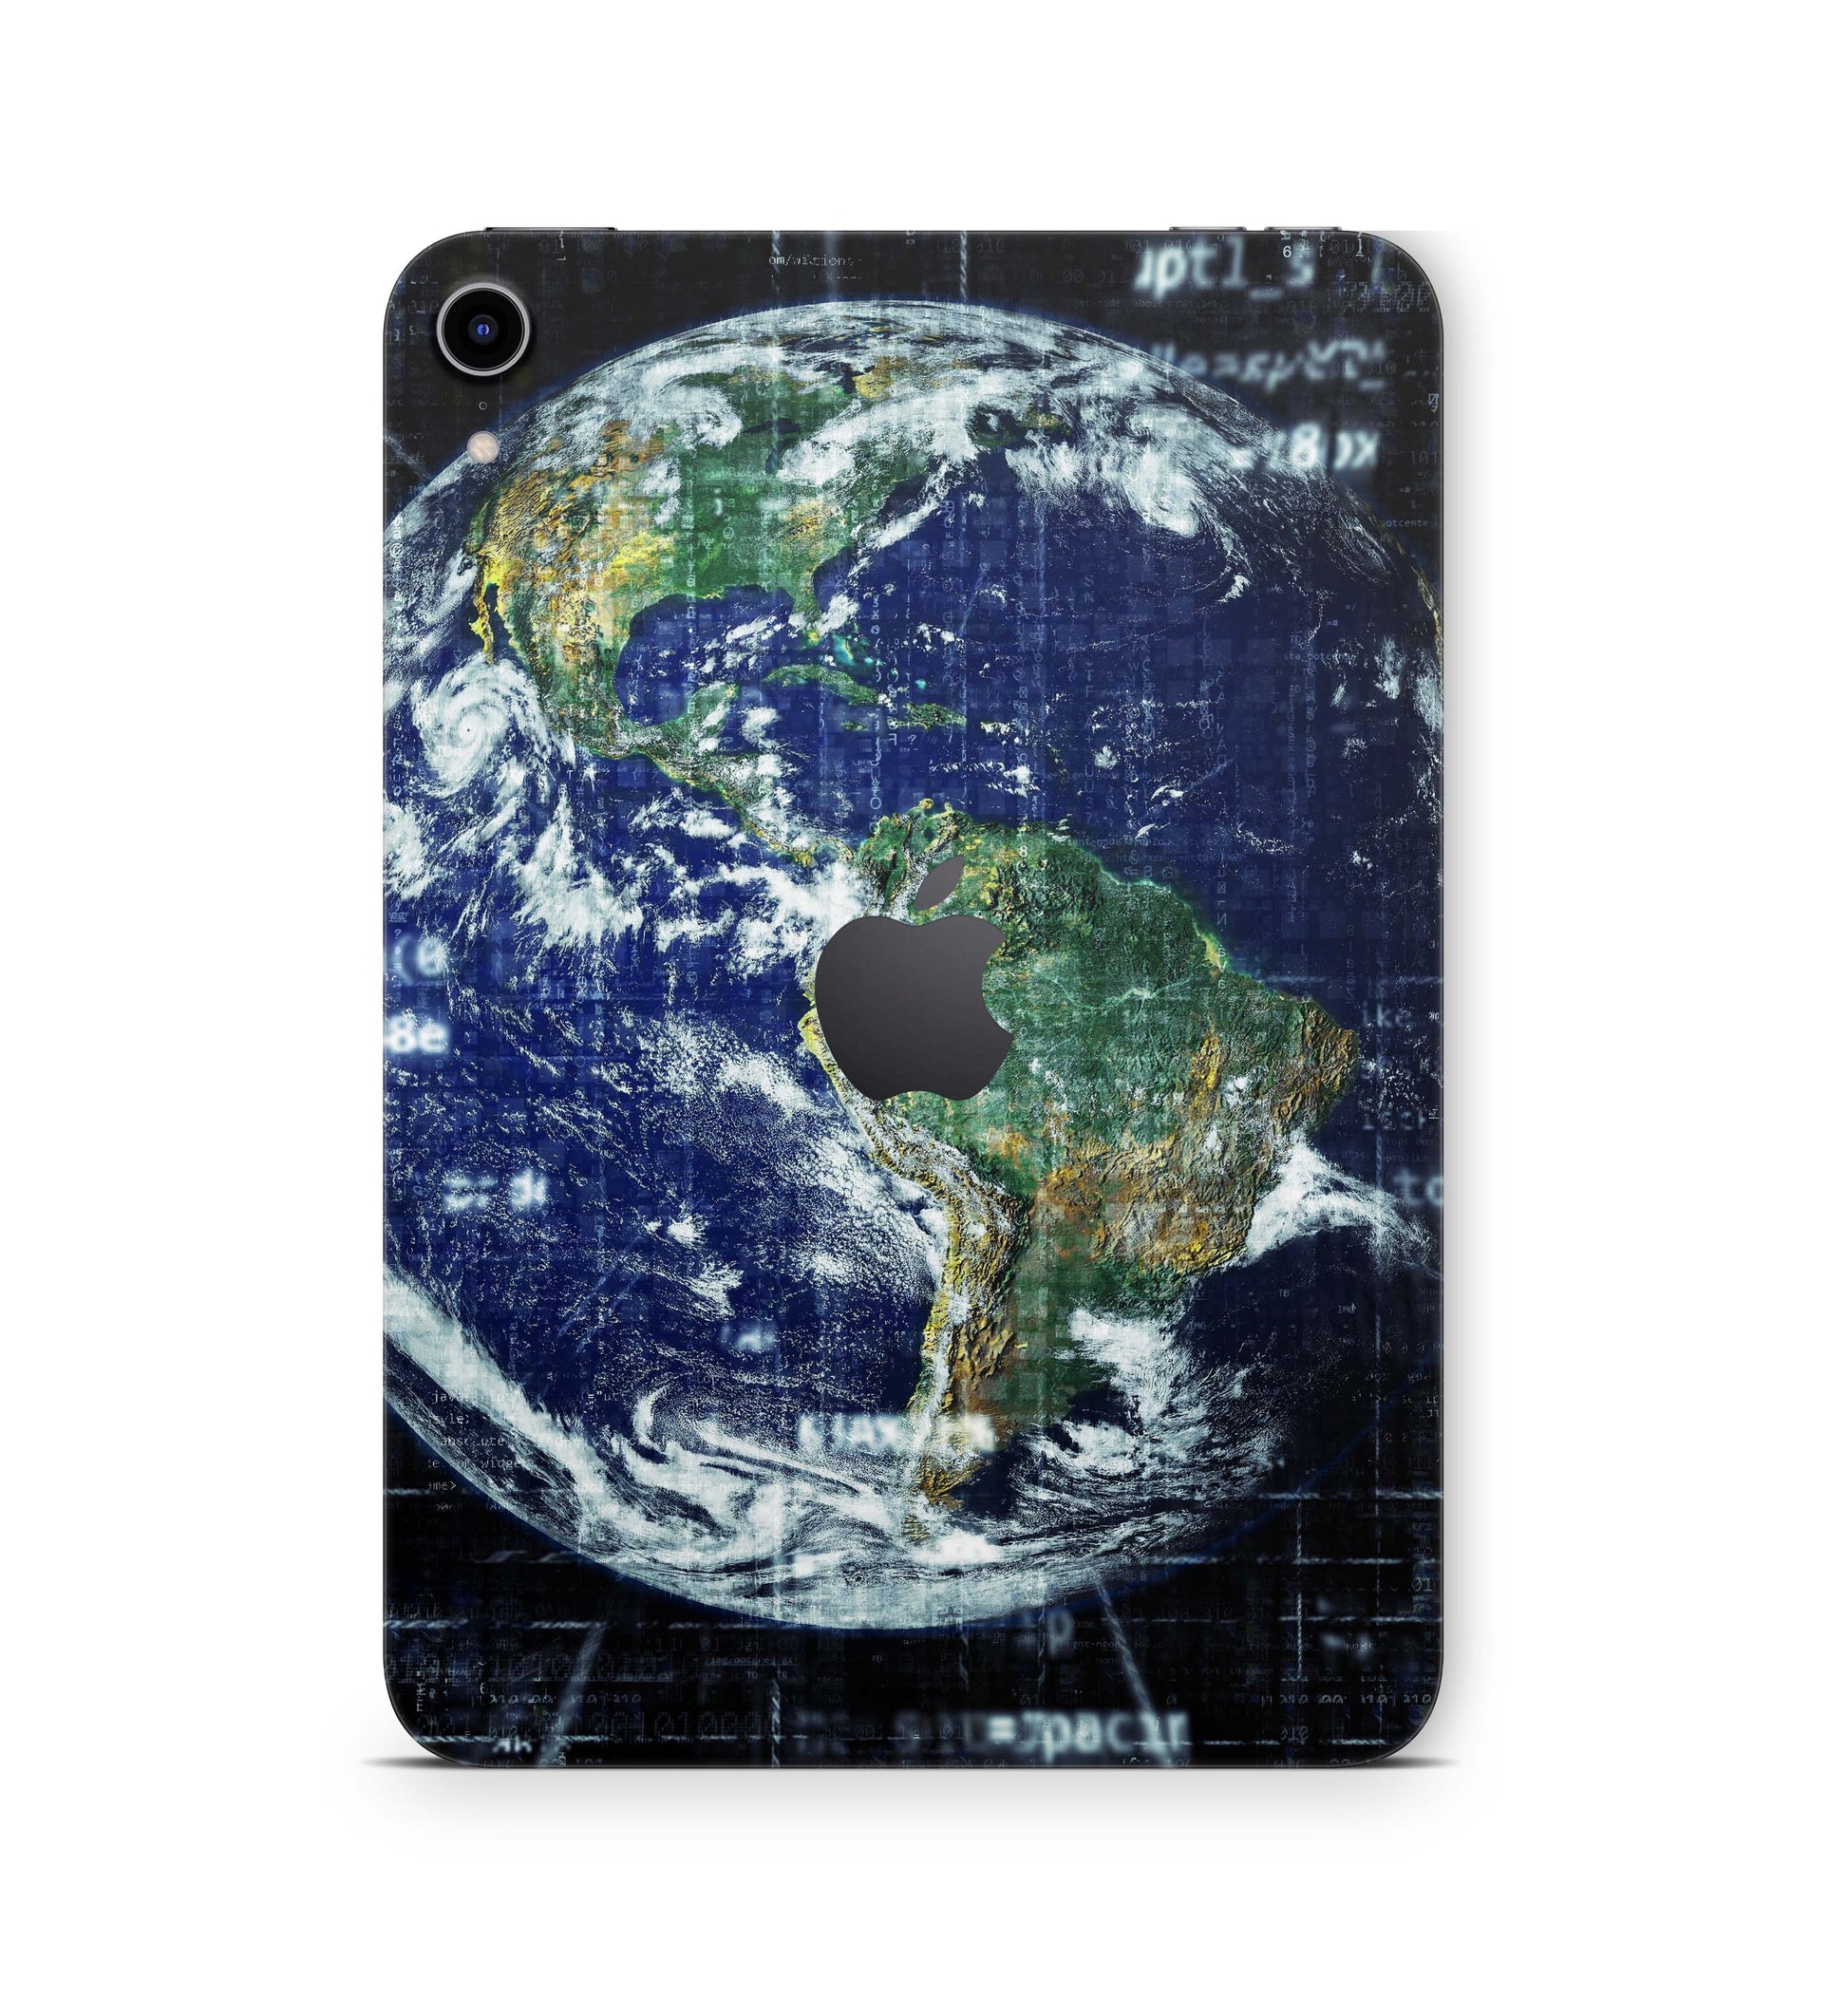 Apple iPad Skin Design Cover Folie Vinyl Skins & Wraps für alle iPad Modelle Aufkleber Skins4u Digital-Earth  